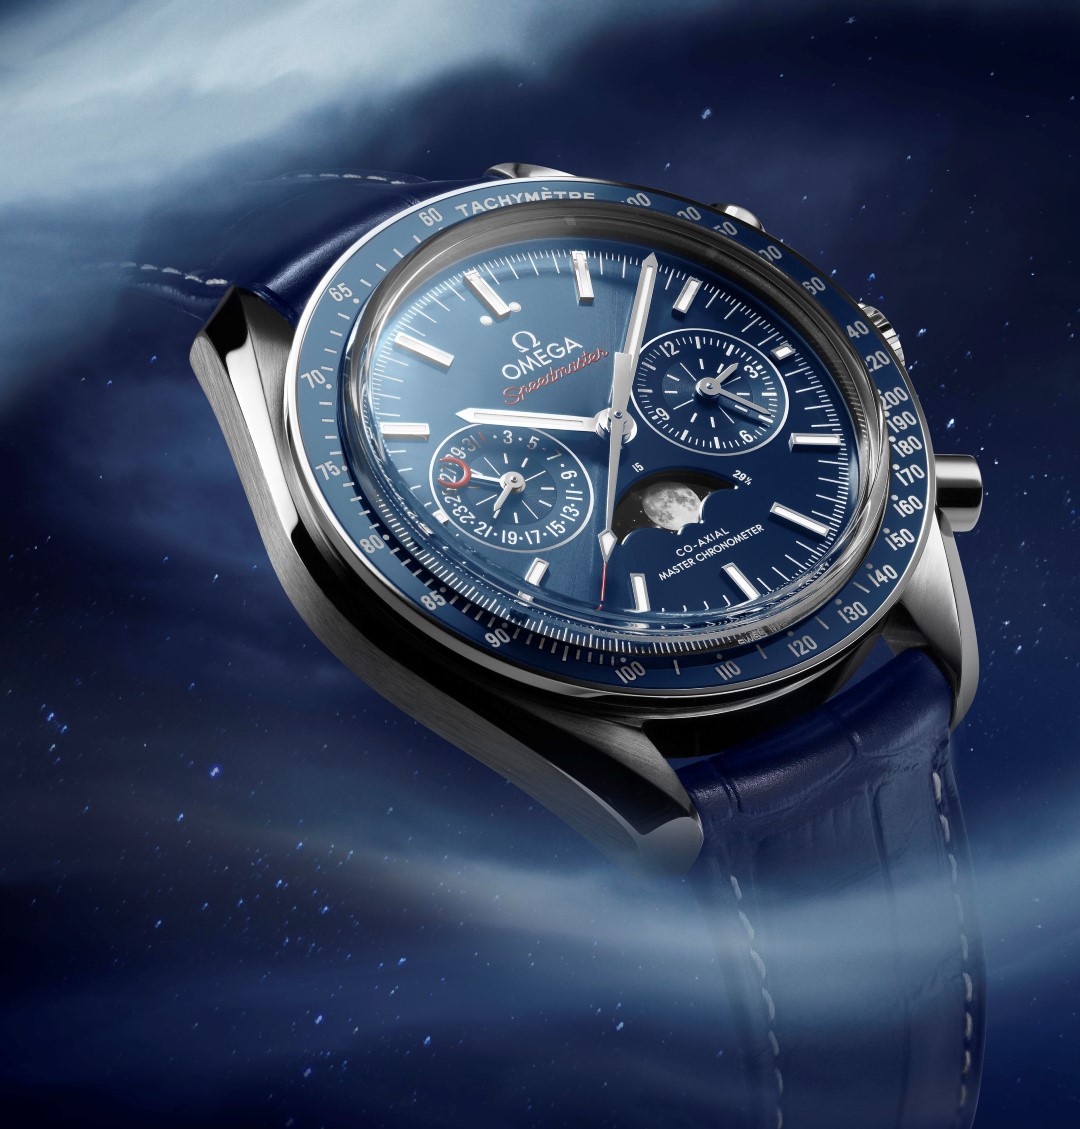 Baselworld 2016 Omega: i nuovi segnatempo Speedmaster Moonphase Master Chronometer e il Planet Ocean 600M Master Chronometer